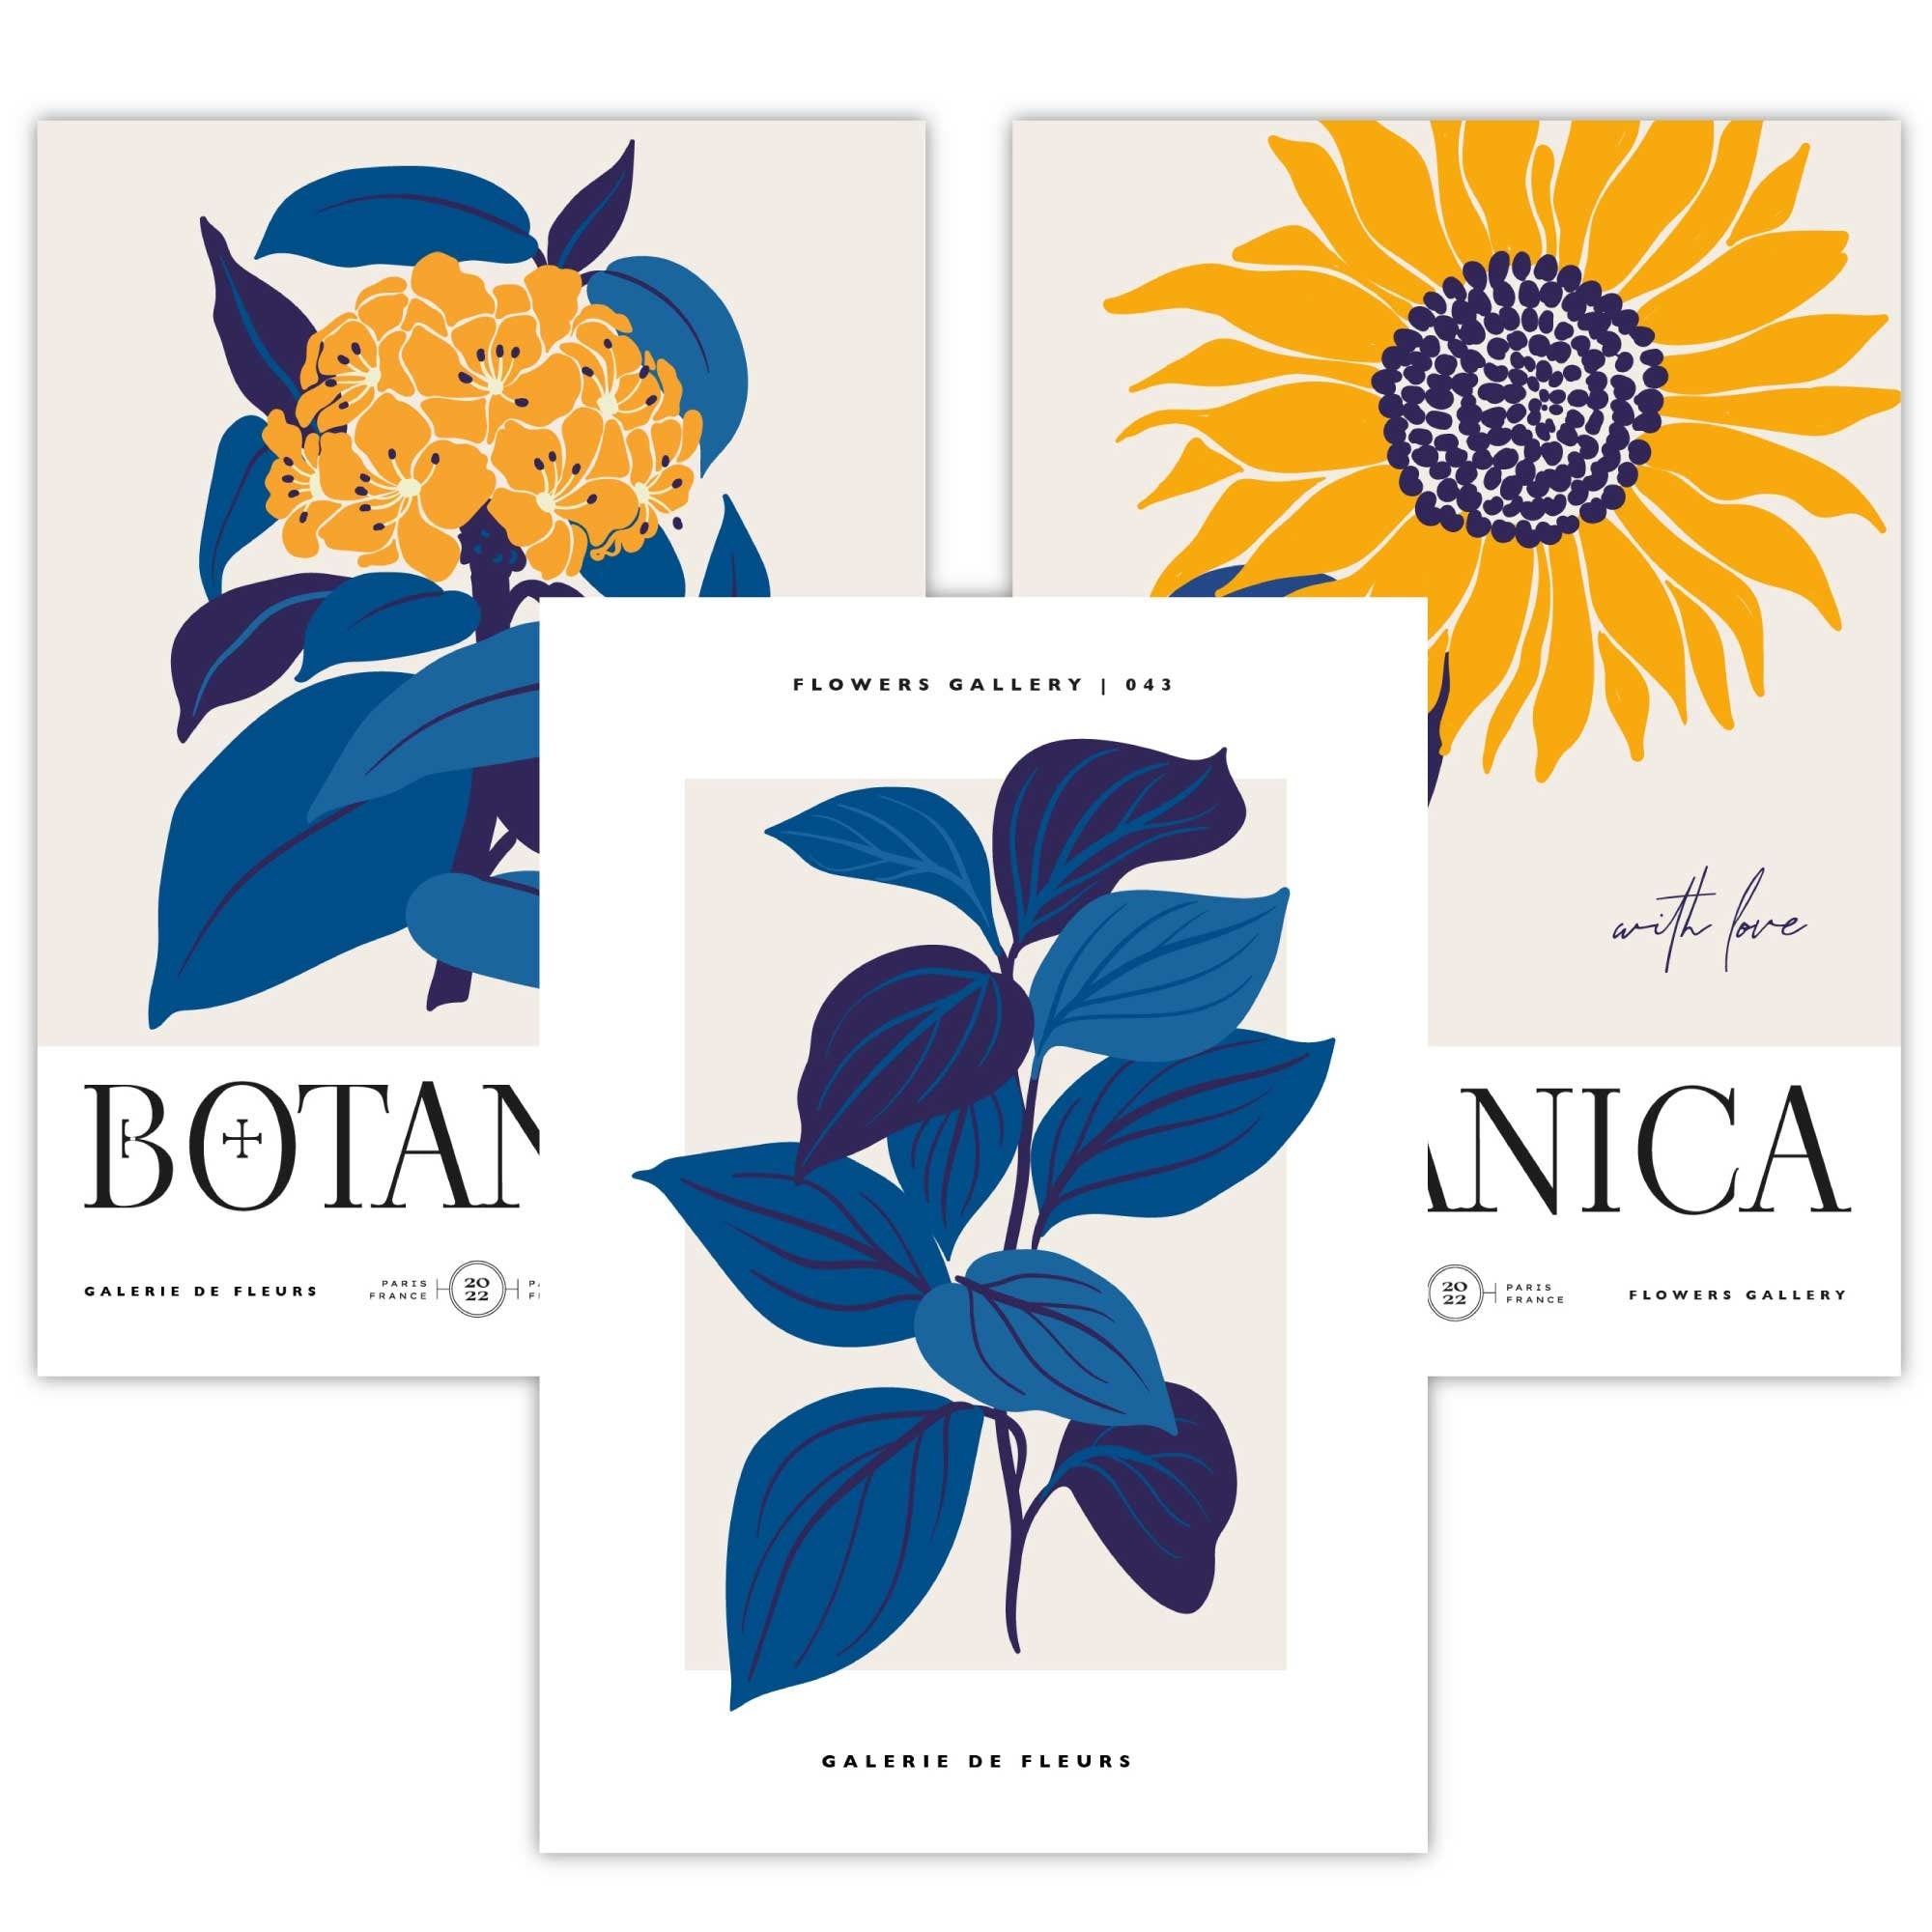 Set of 3 Navy Blue Flower Market Prints, Boho Floral Prints, Botanical Wall Decor, Sunflower, Blue and Yellow Vintage Floral Wall Art Prints